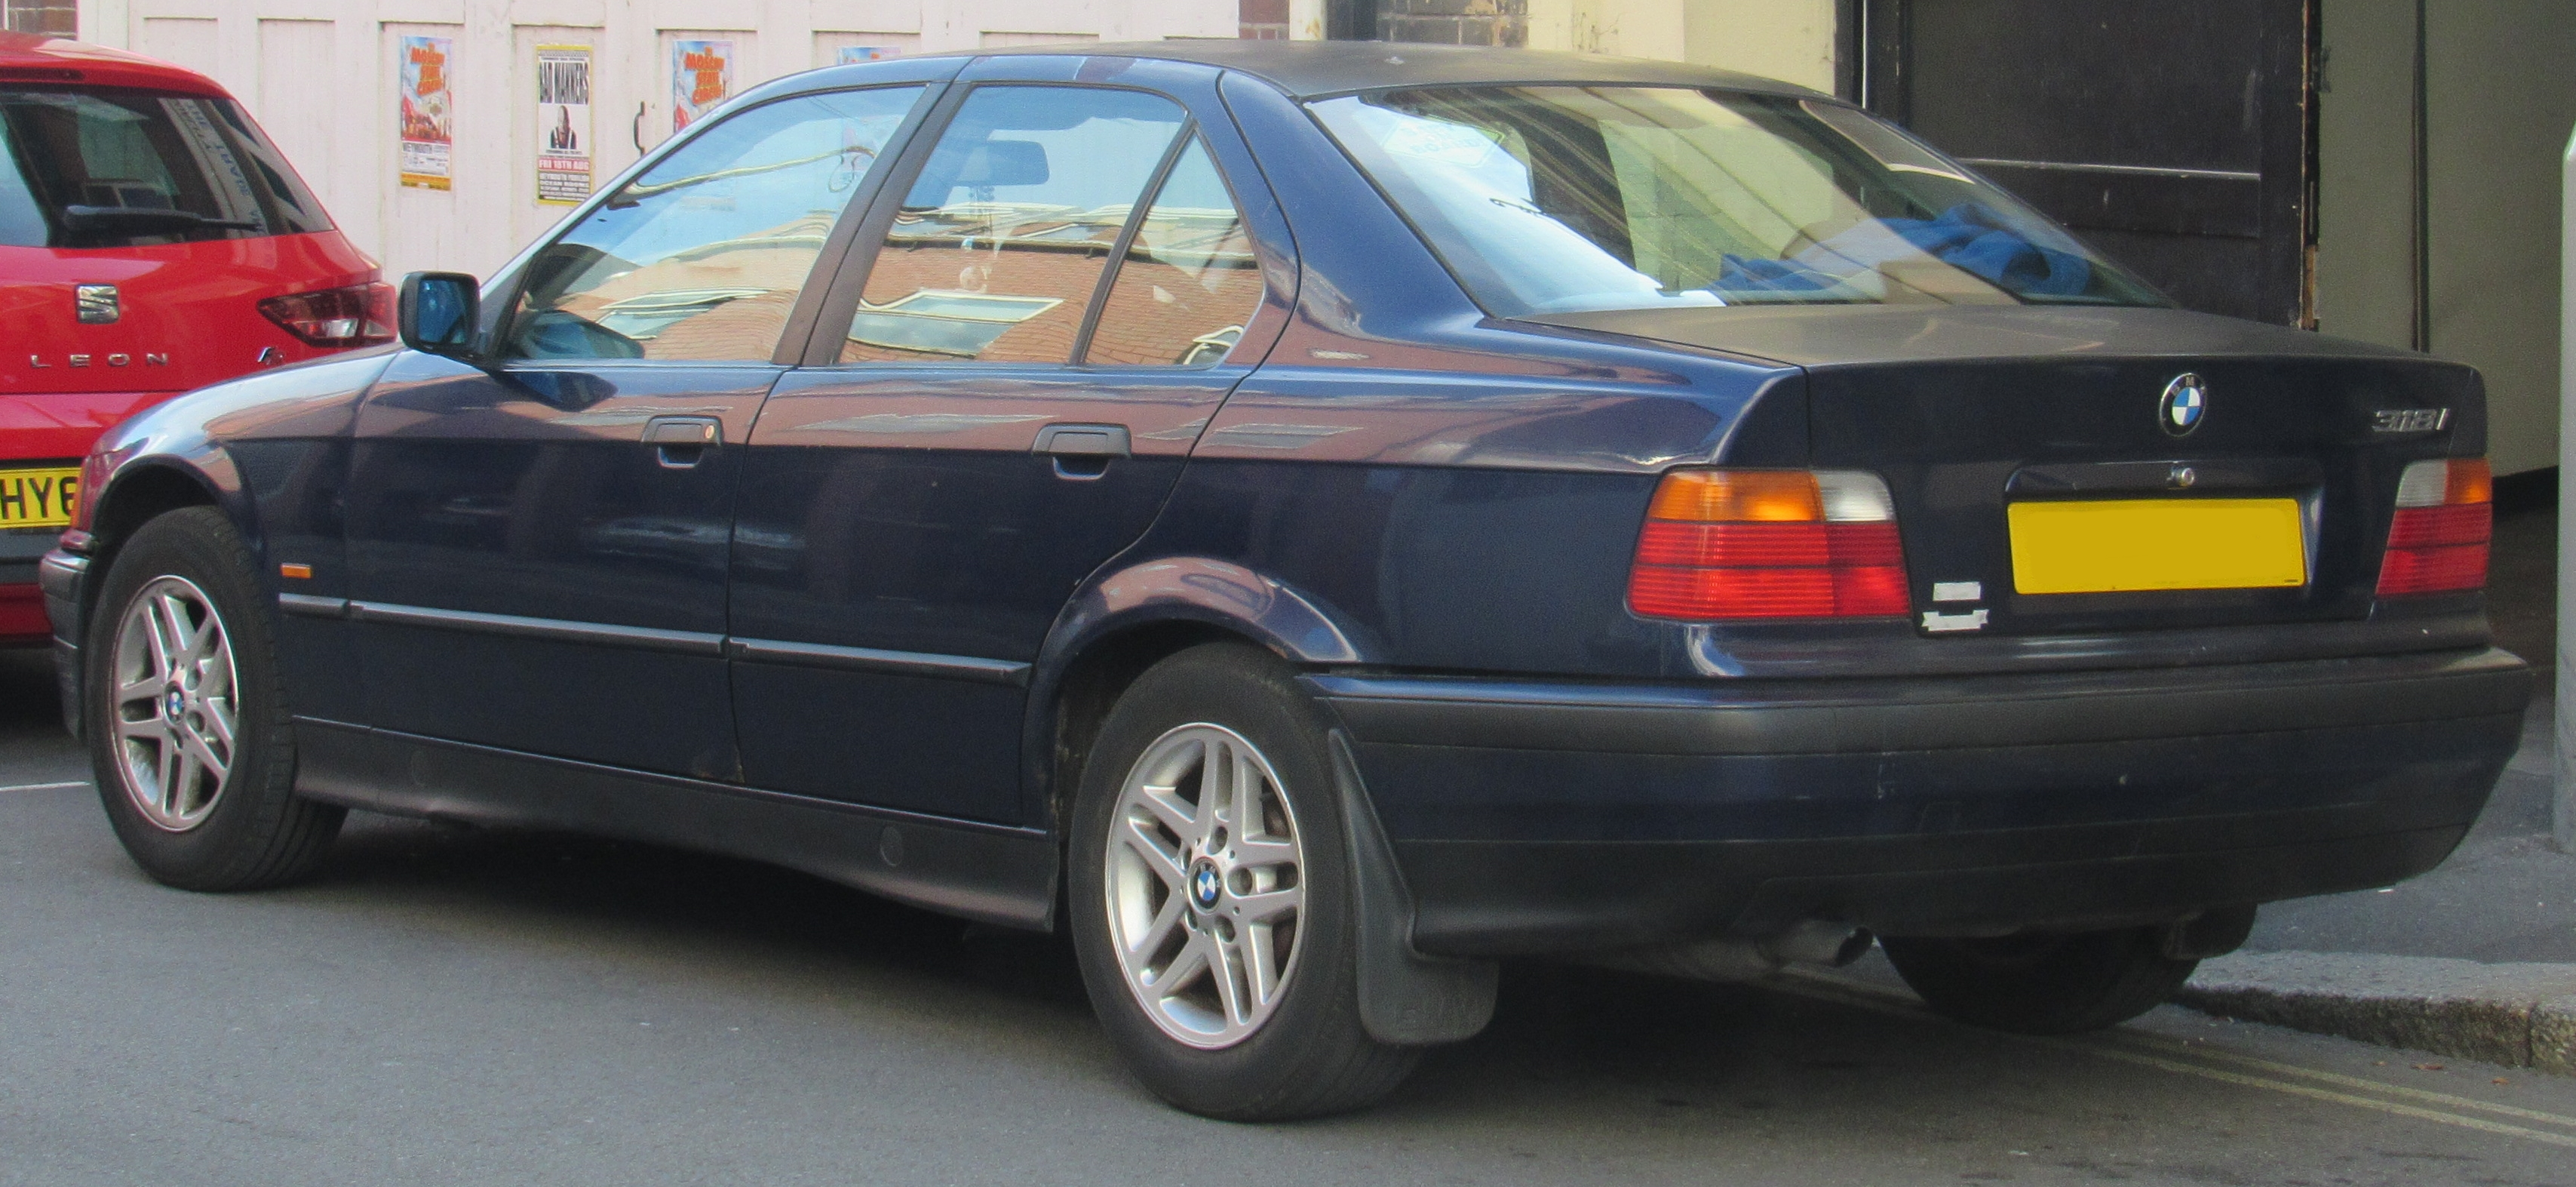 File:1998 BMW 318i SE 1.8 Rear.jpg - Wikimedia Commons